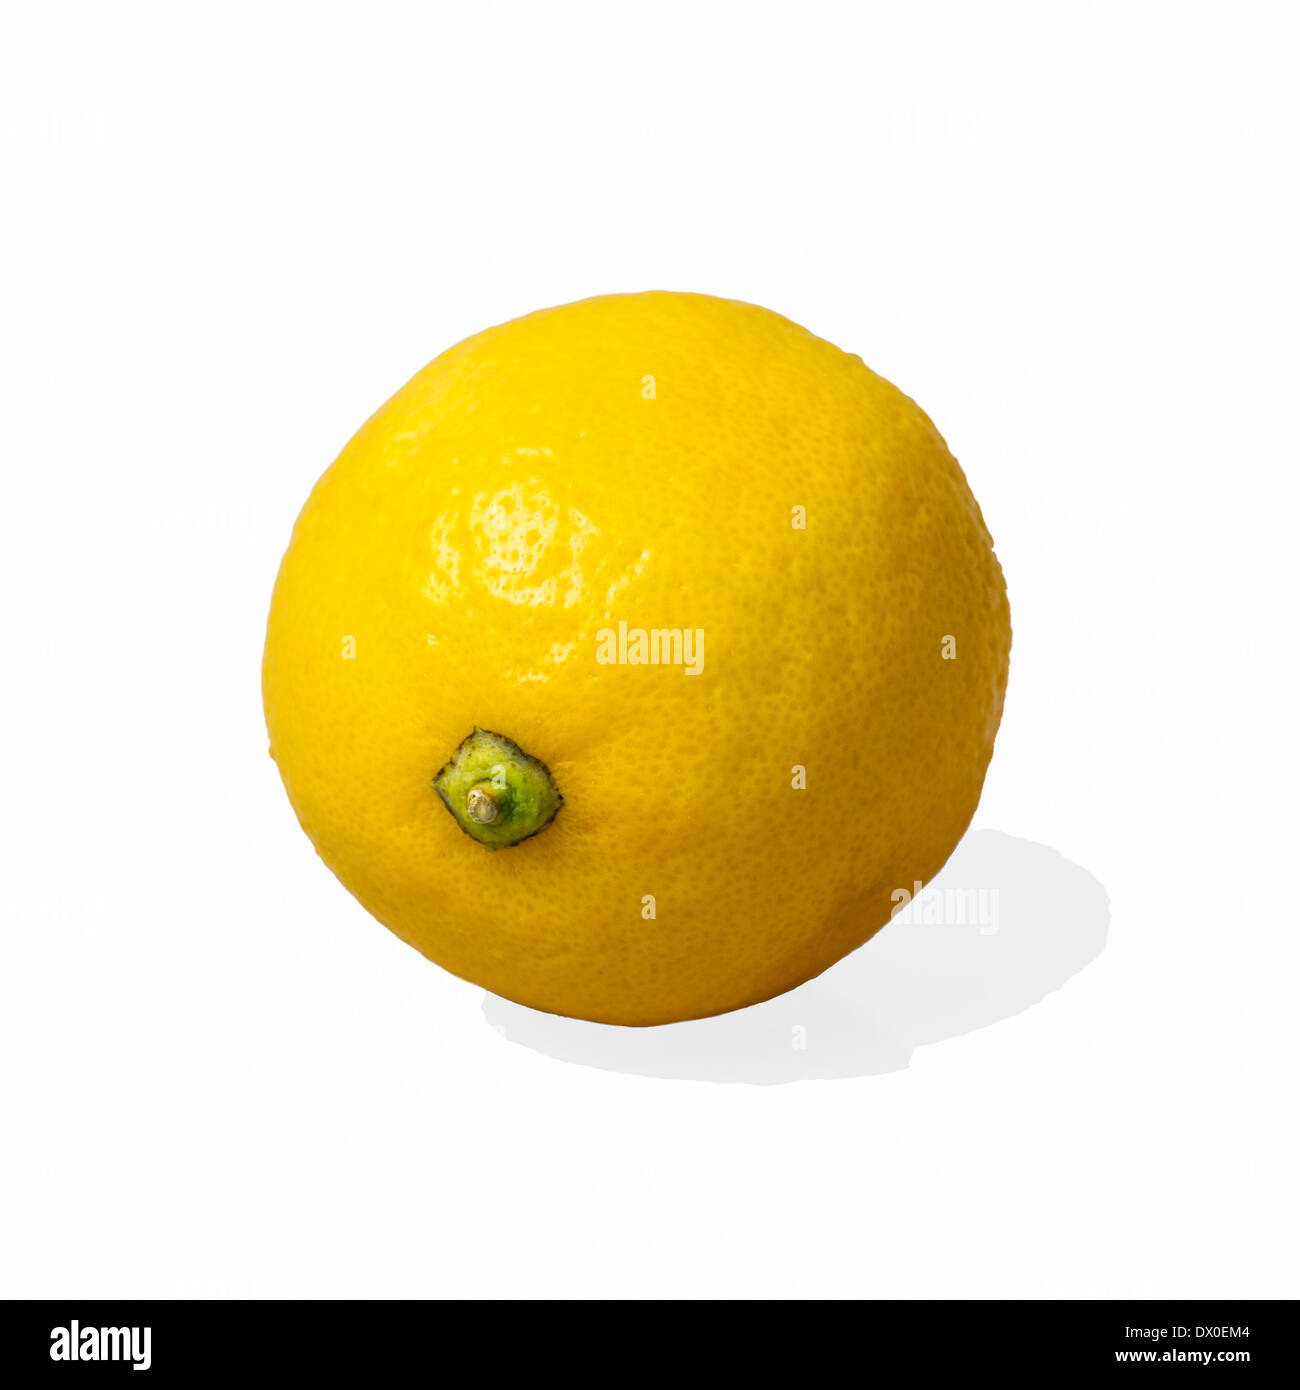 Yellow lemon citrus fruit isolated against white background. Square format photography. Stock Photo